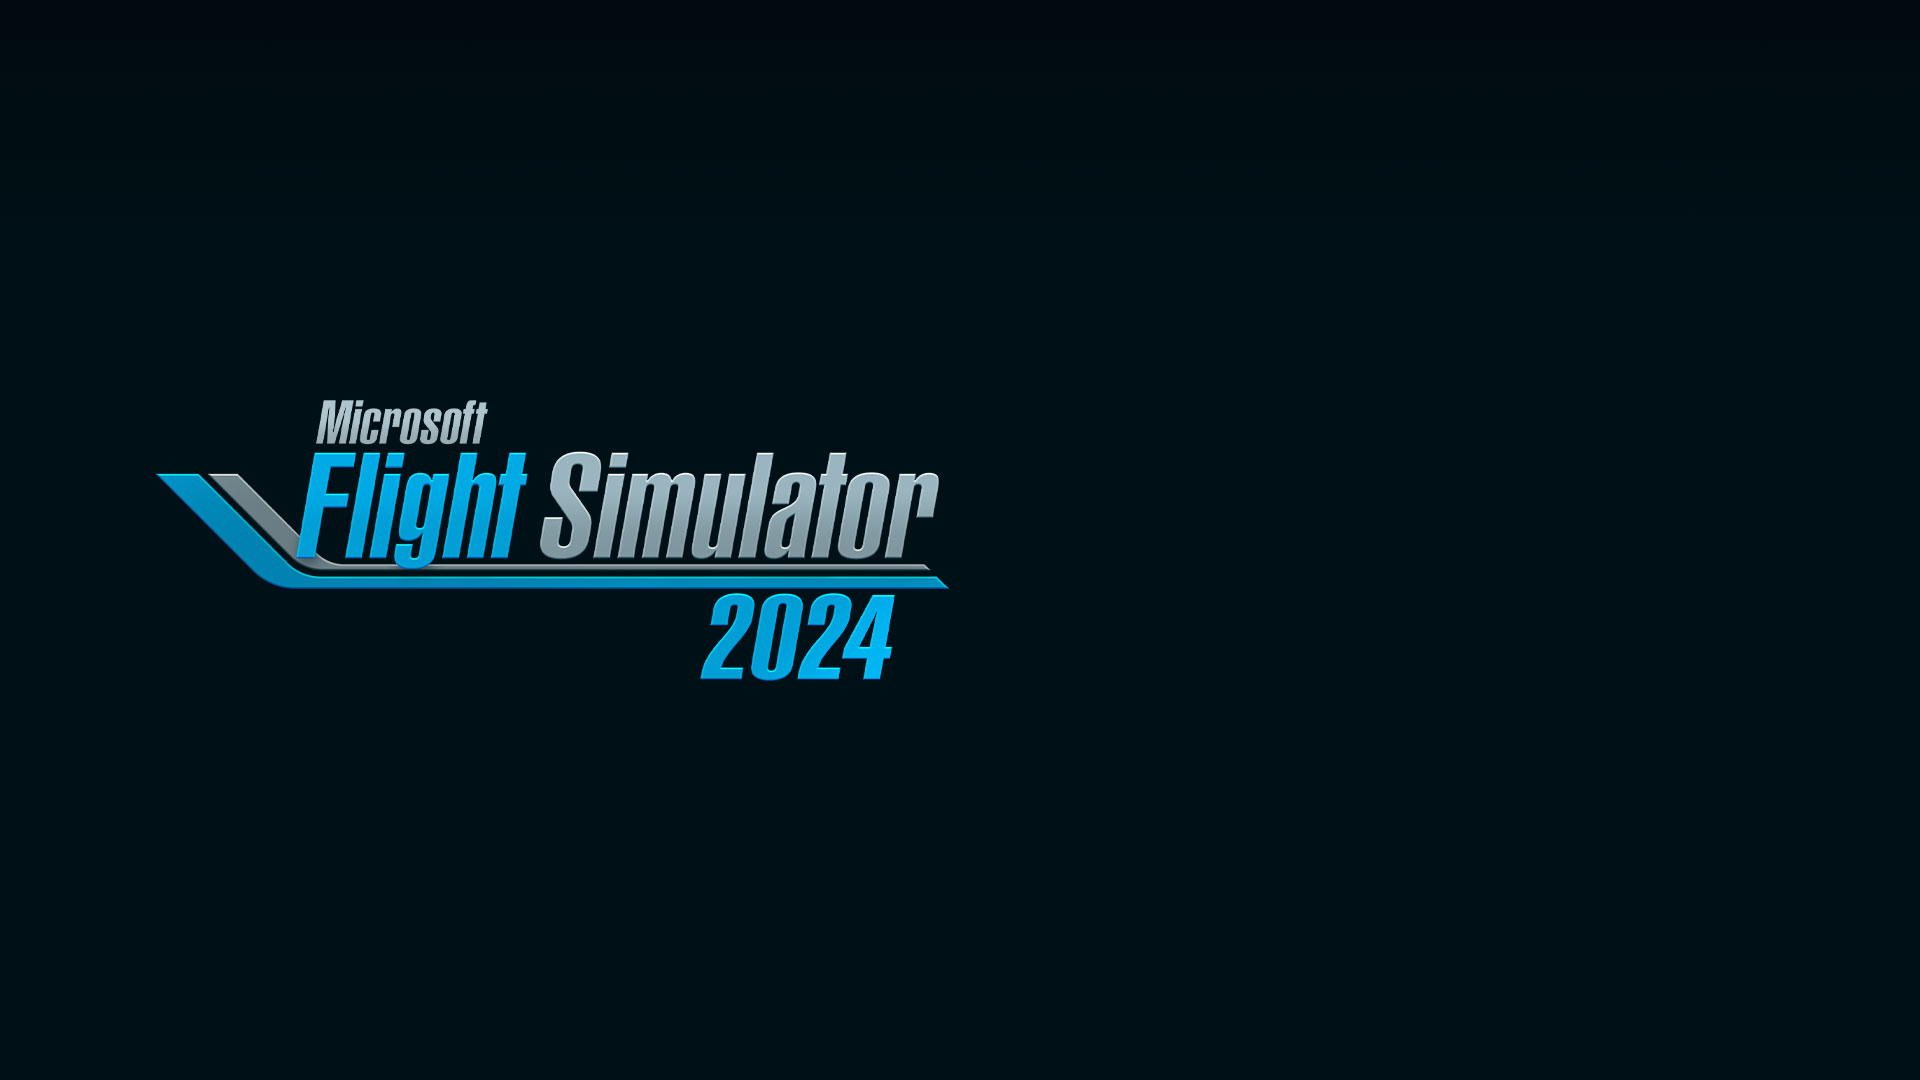 Microsoft Flight Simulator 2024 Logo.